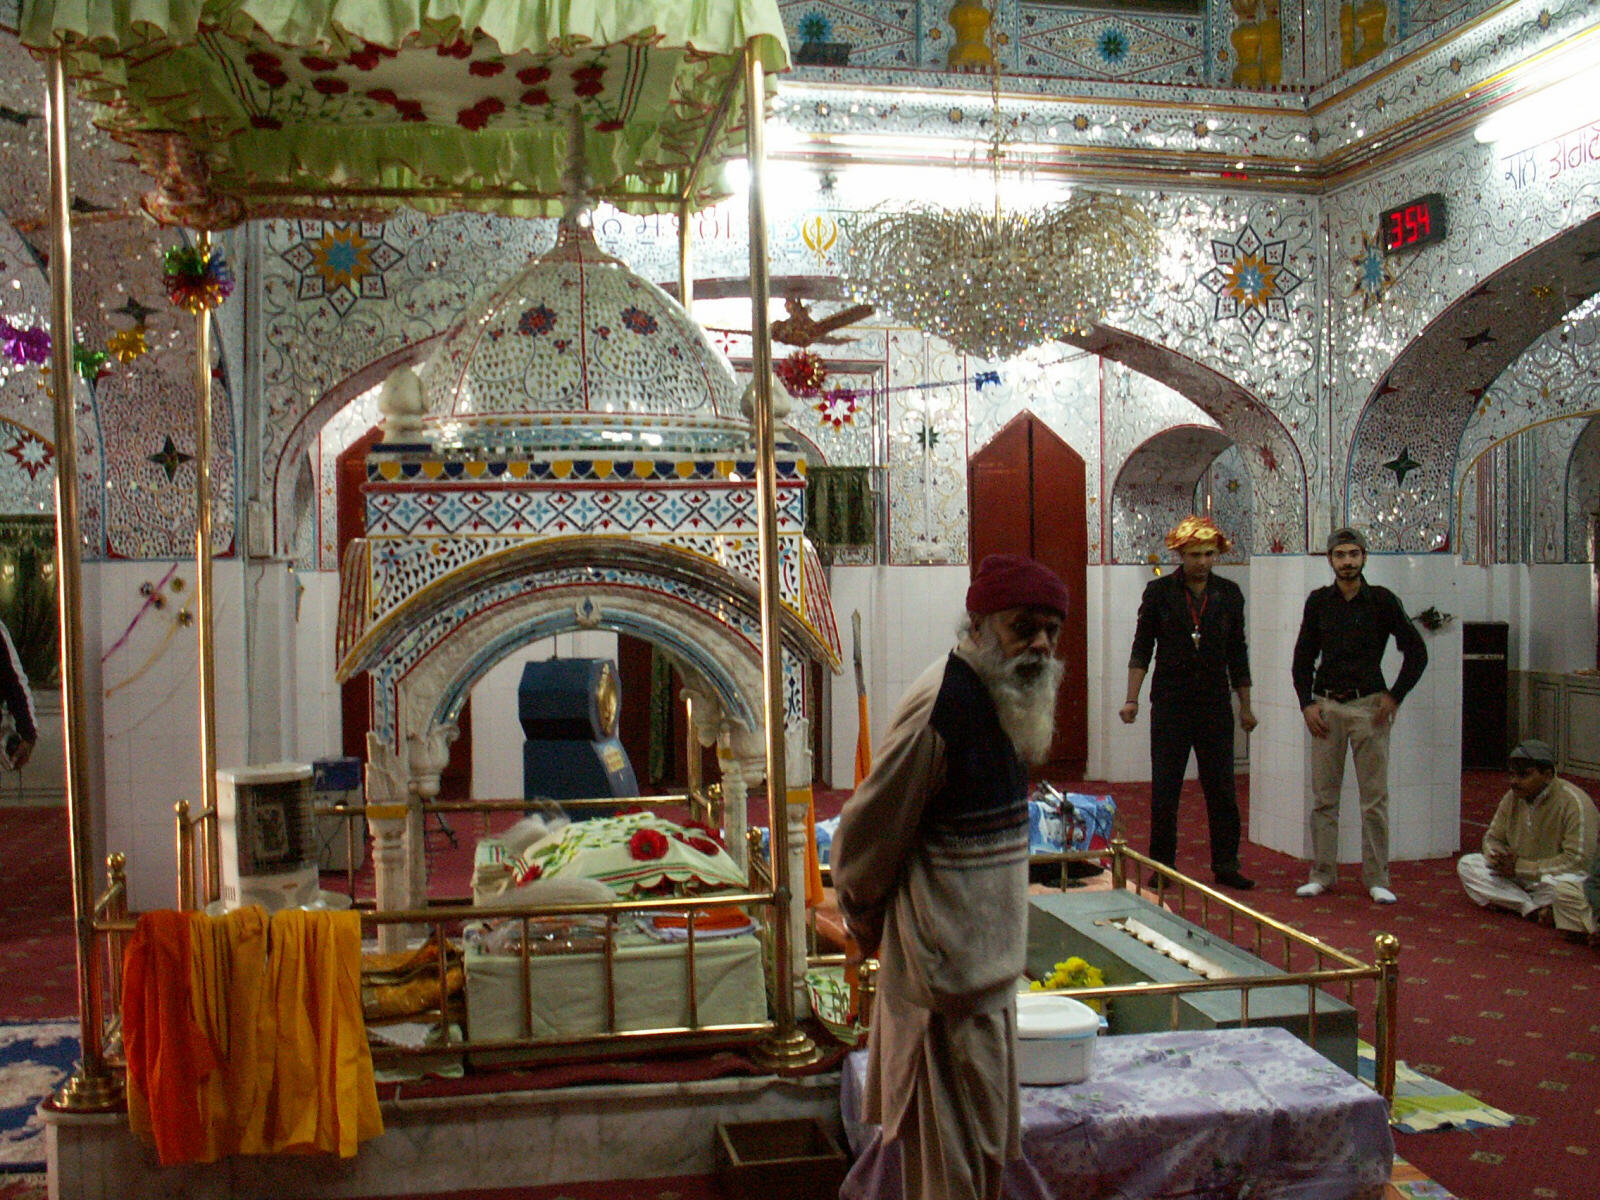 In Hasan Abdul Sikh temple in Pakistan